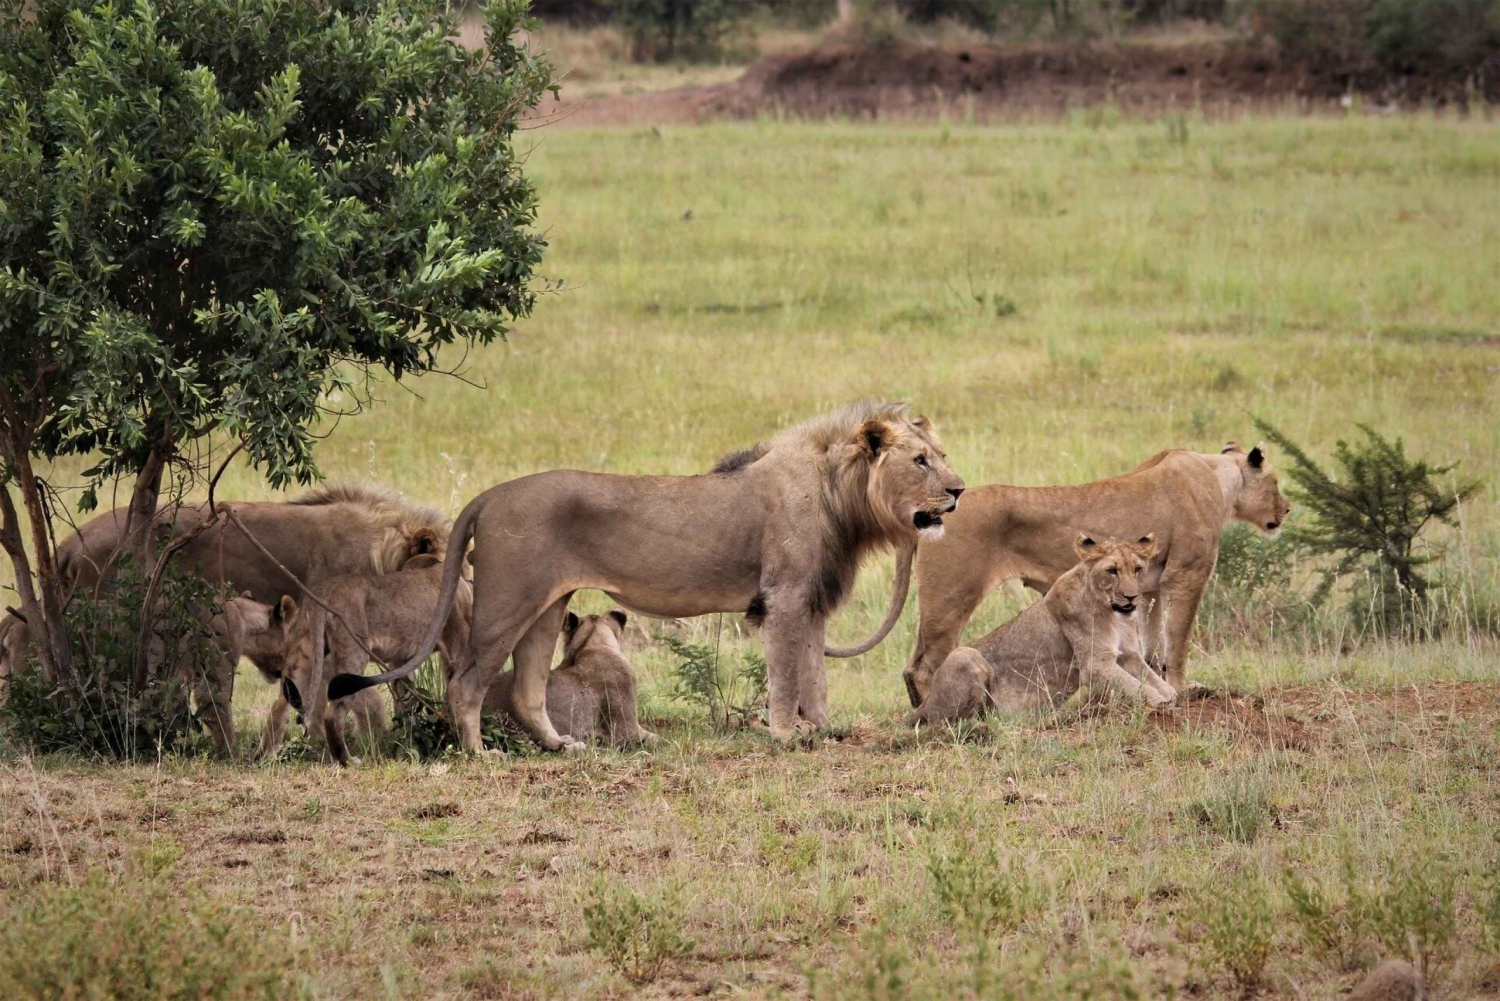 Guided Tour: Nairobi National Park Private Trip